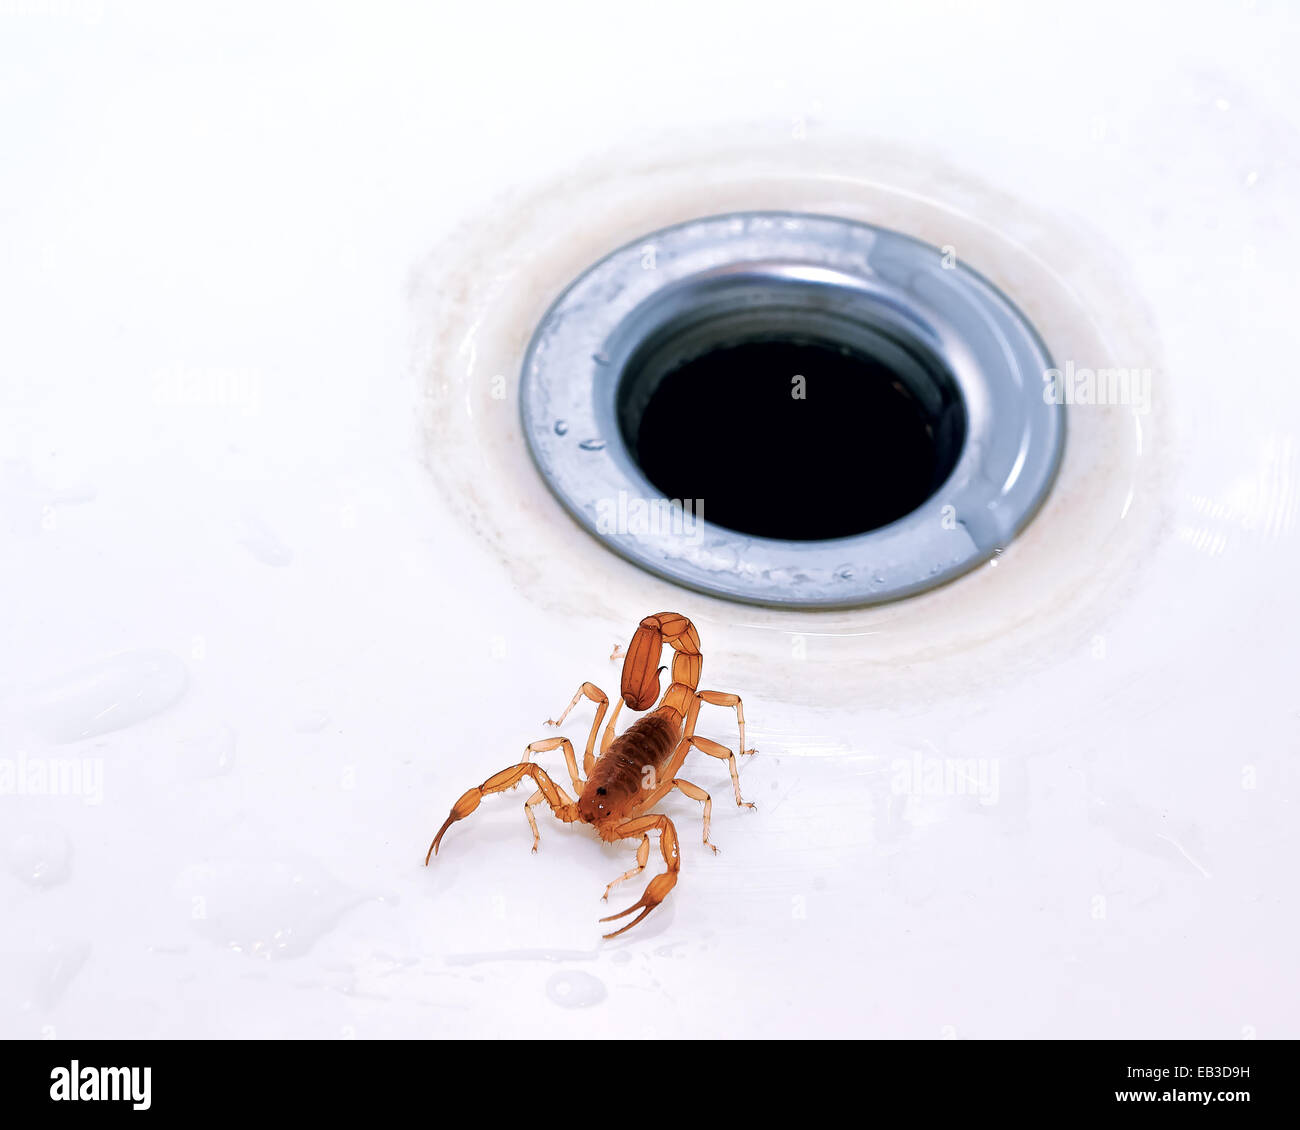 Scorpion by a plug hole Stock Photo